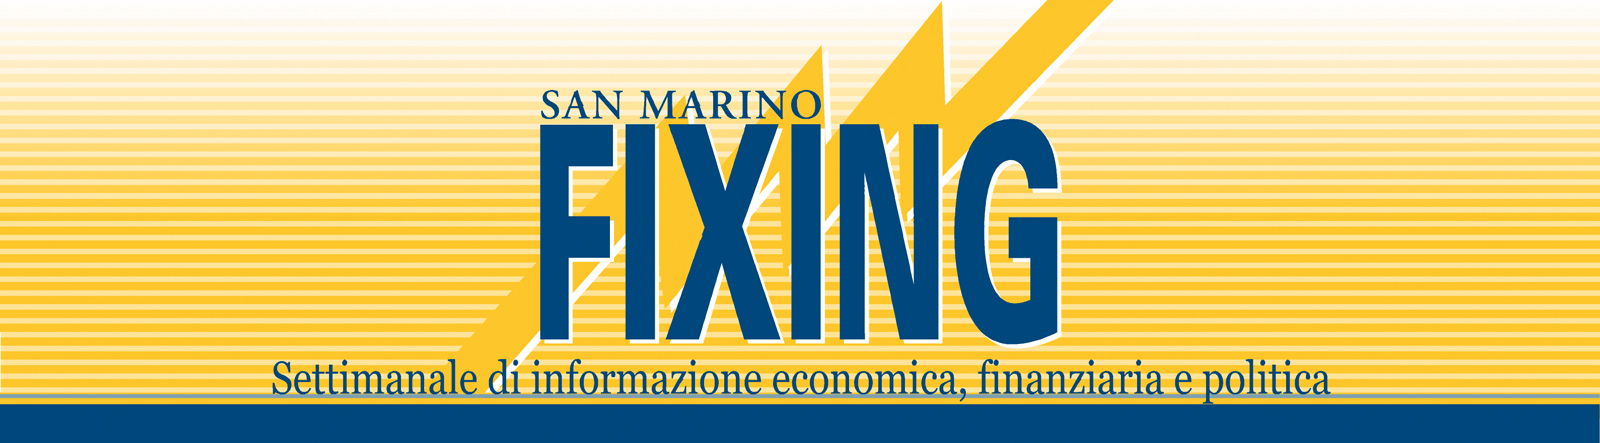 San Marino Fixing